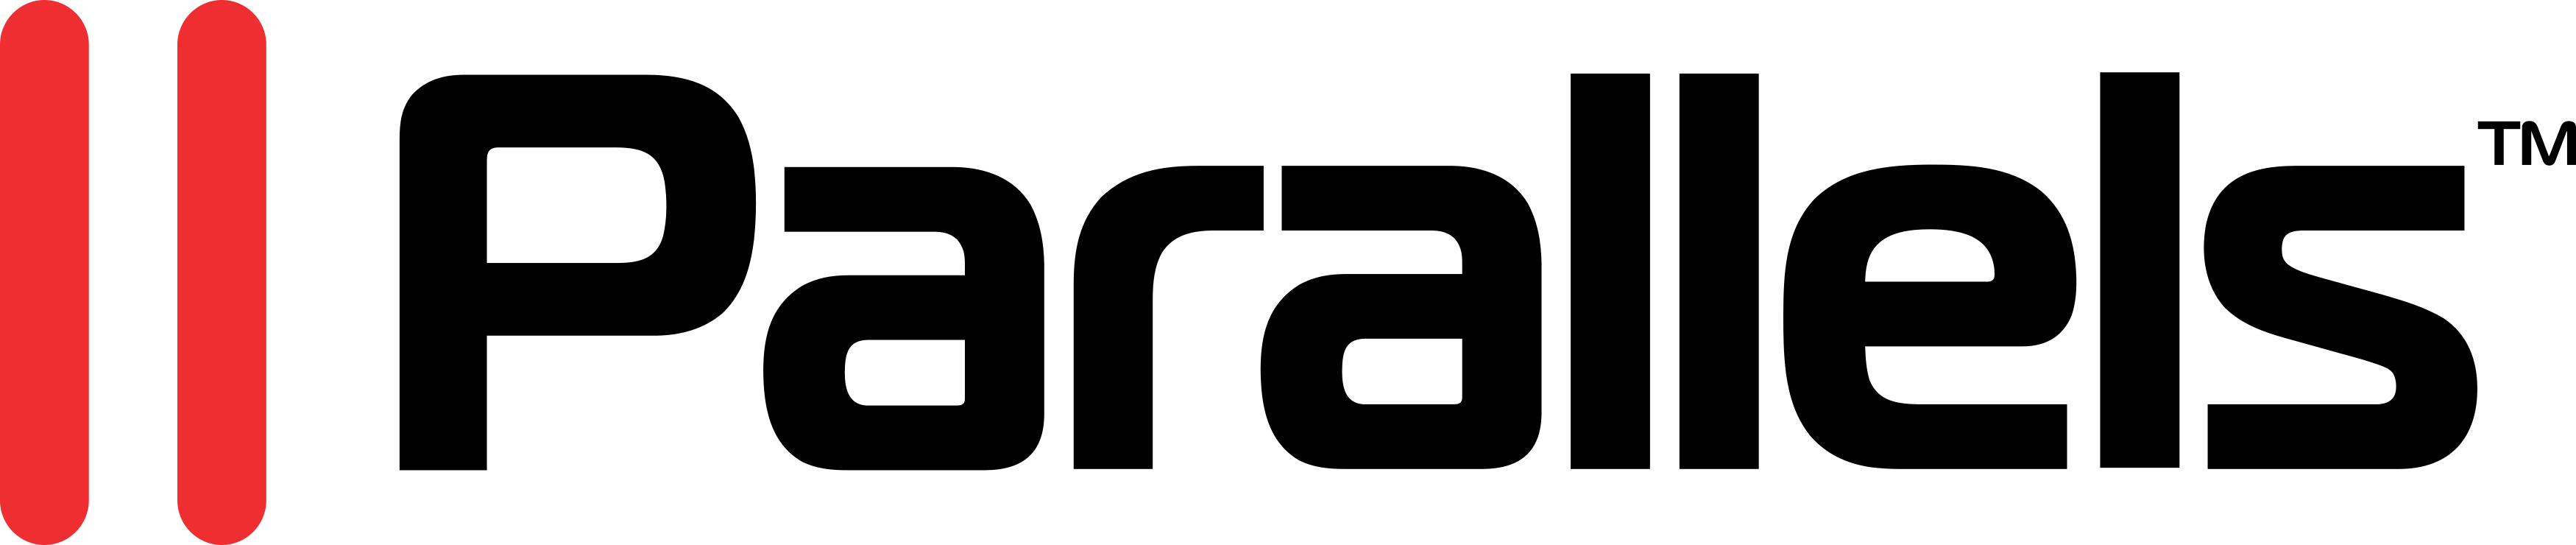 Parallels Logo.